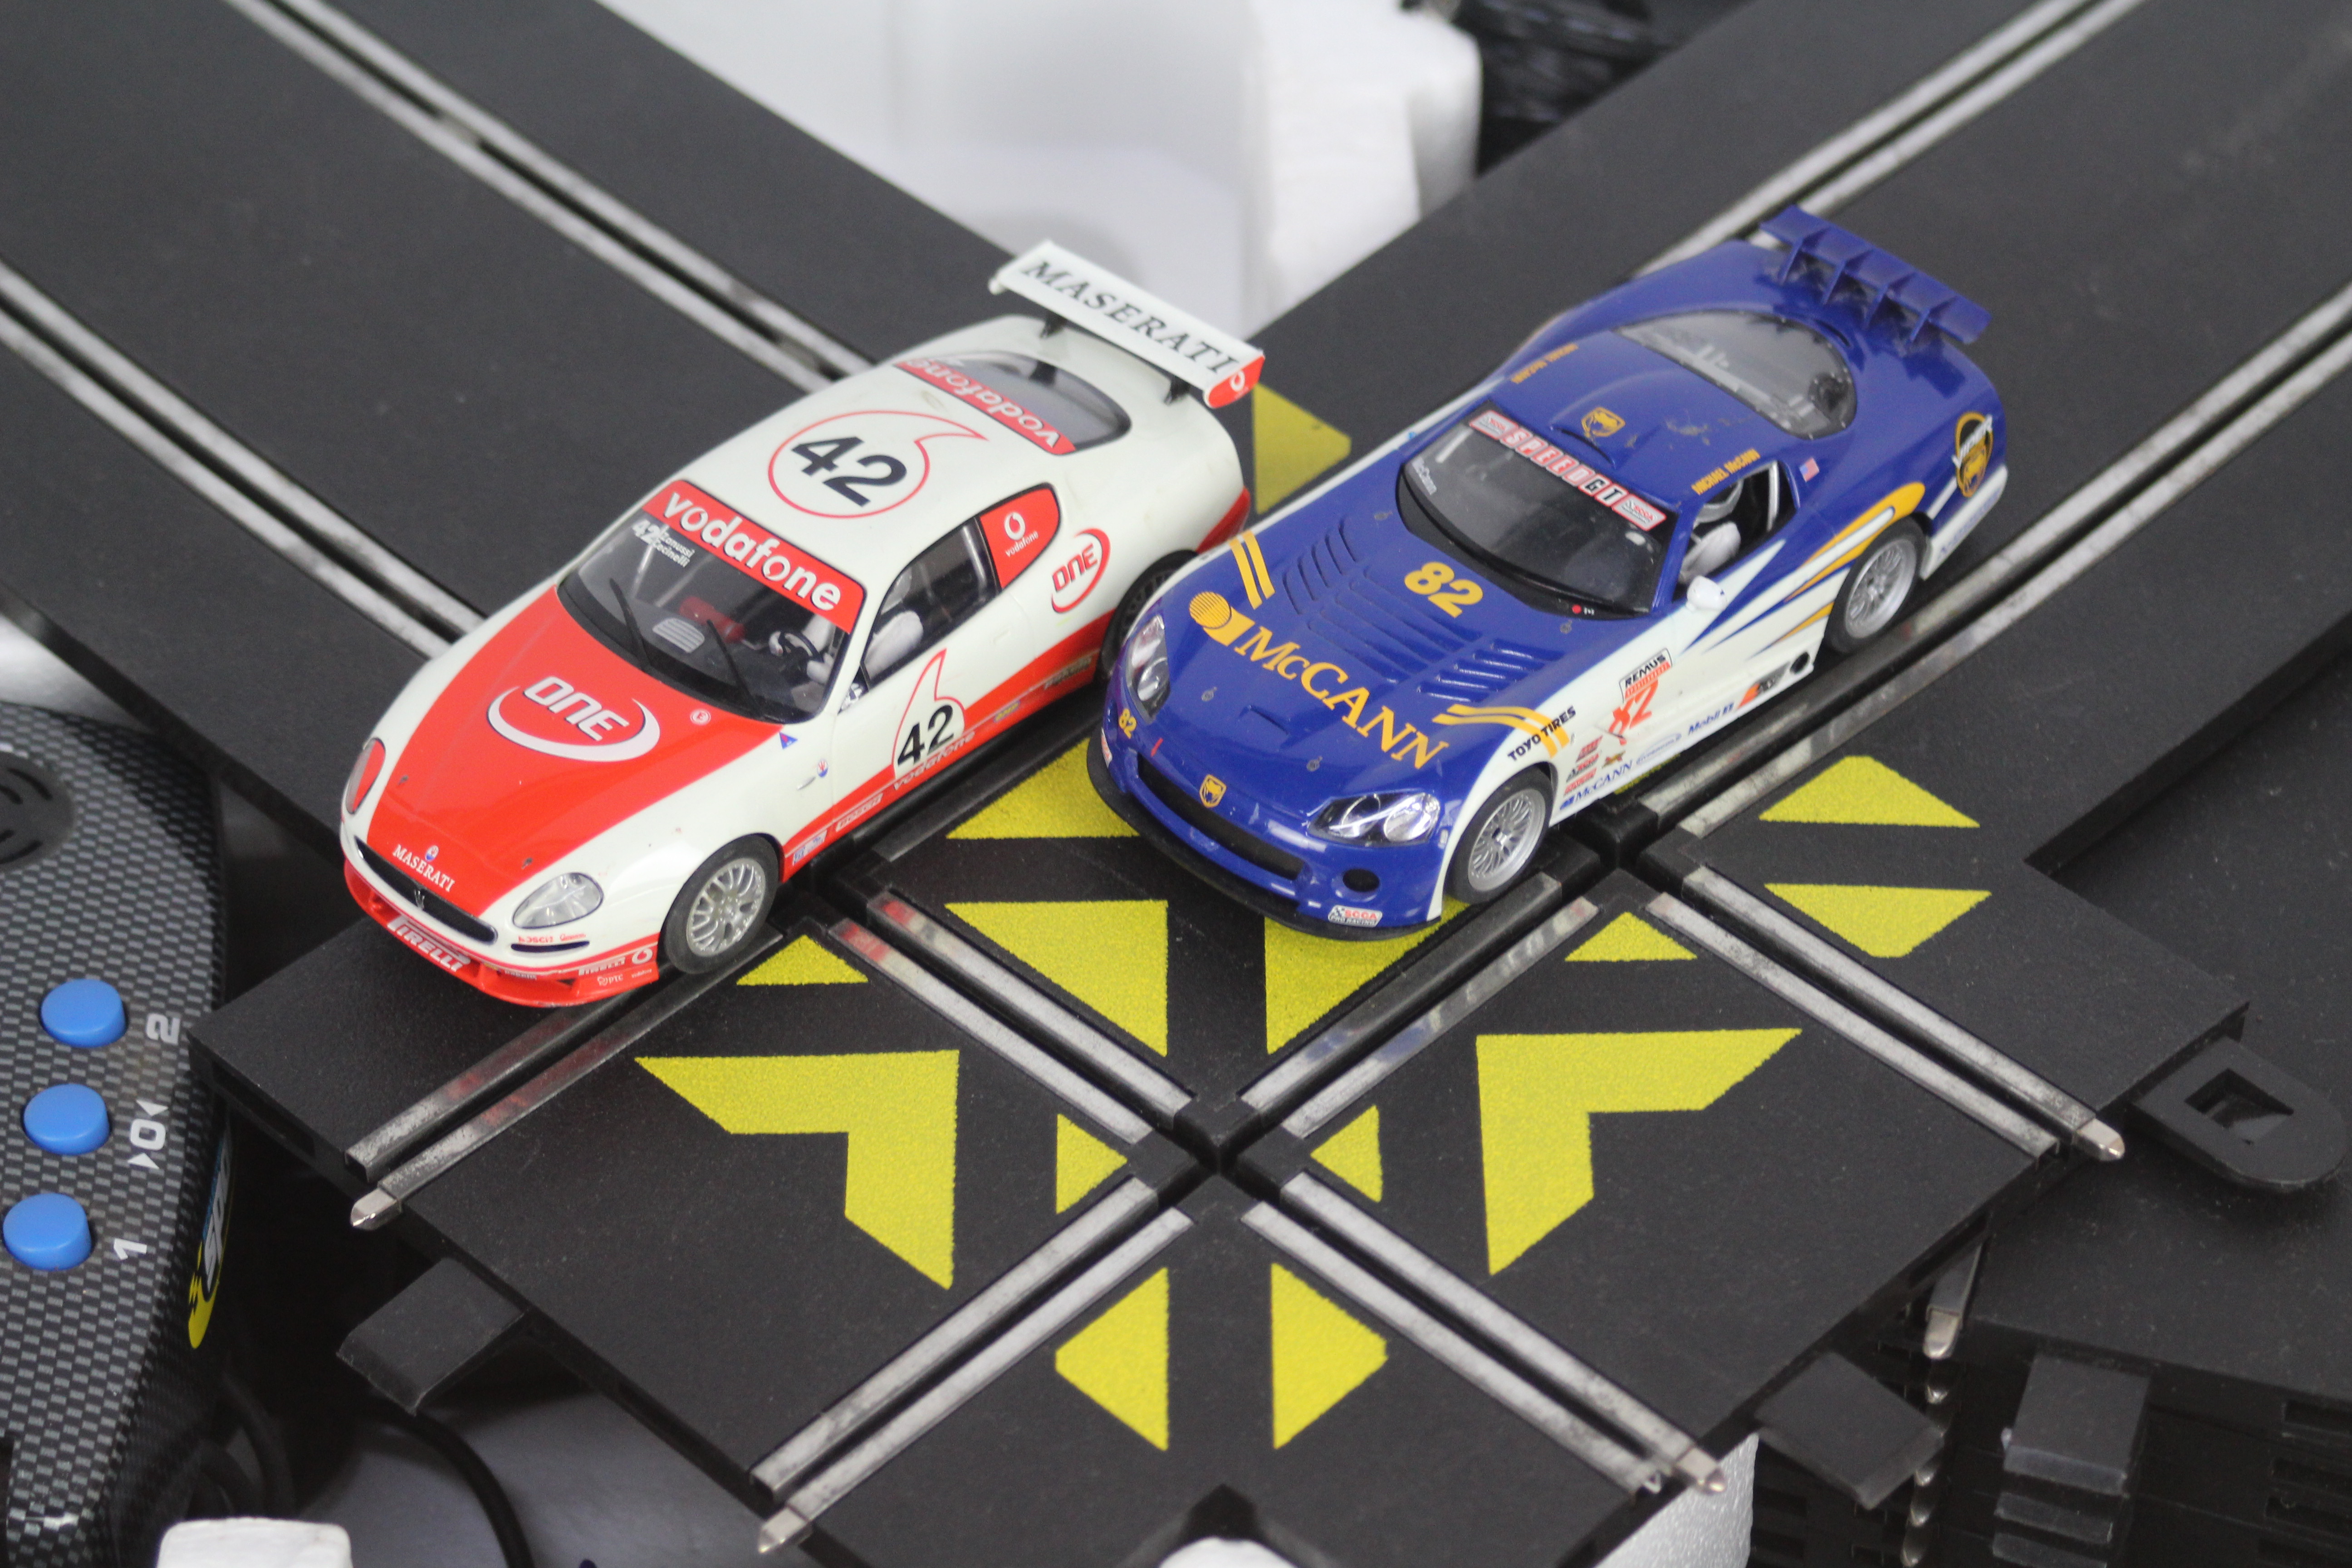 Scalextric - 2 x boxes sets, # C1166L Maserati Challenge and # C653 Grand Prix set. - Image 5 of 5